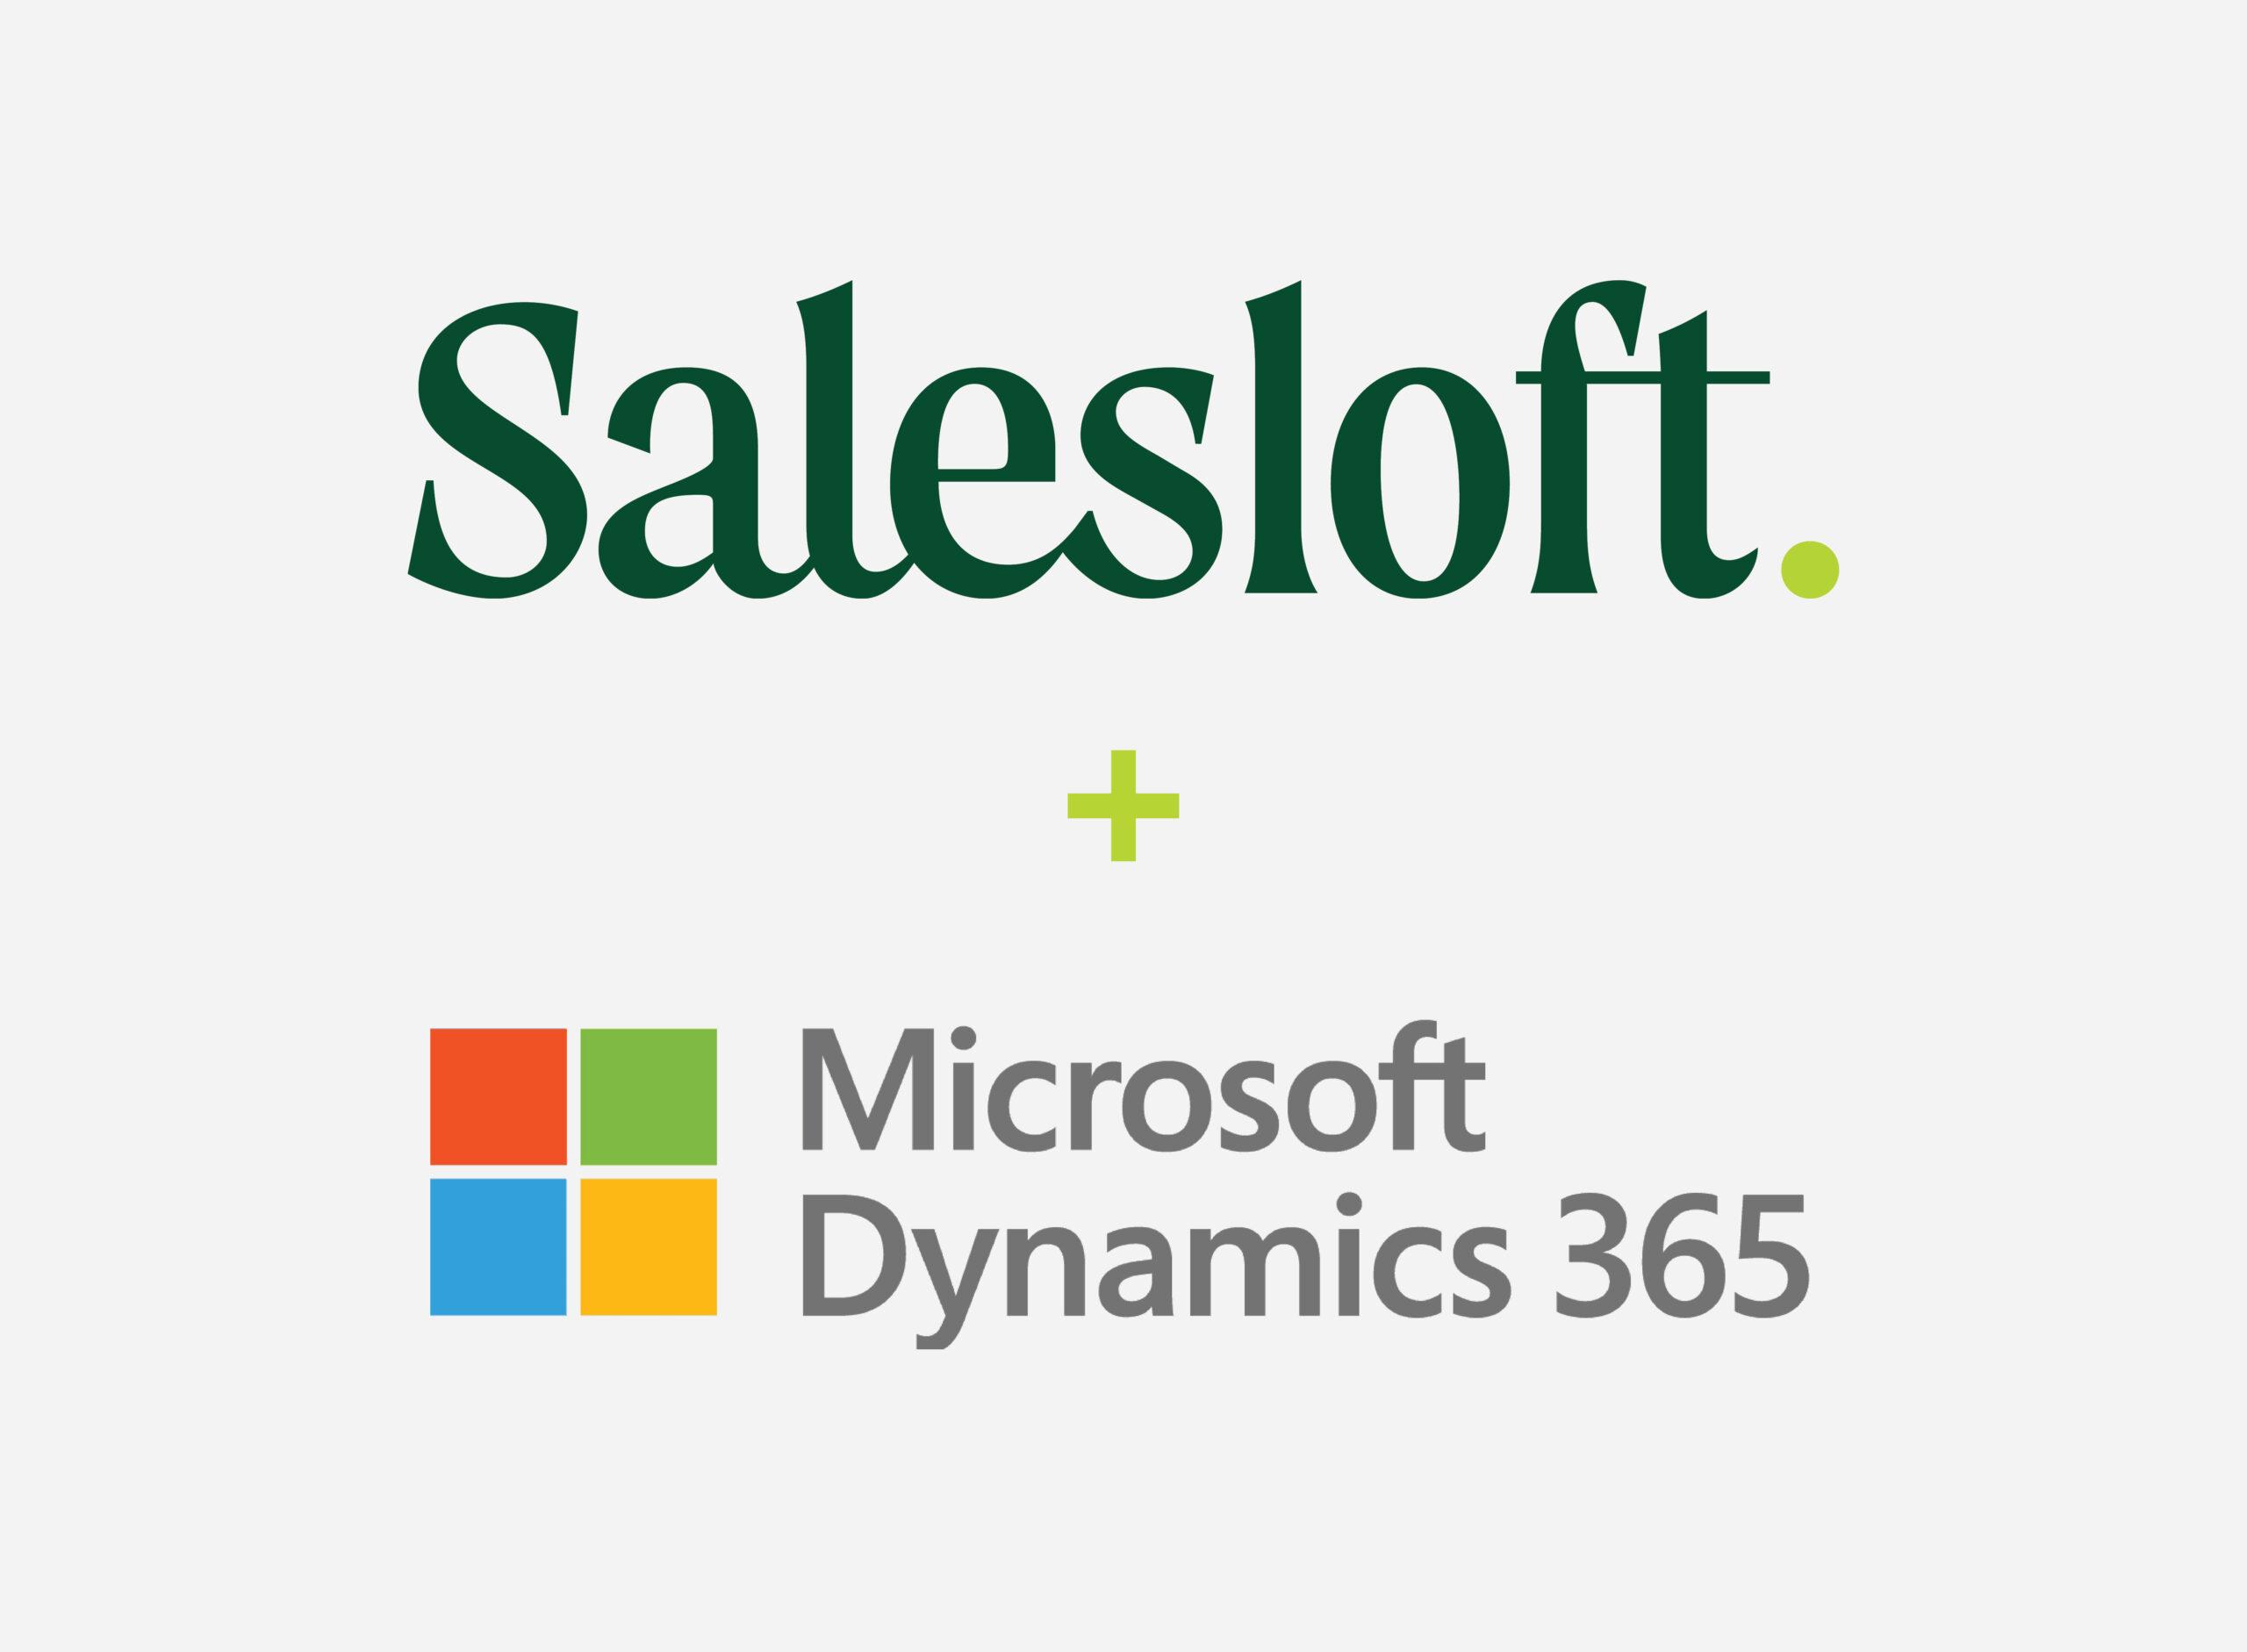 "Salesloft and Microsoft Dynamics 365"